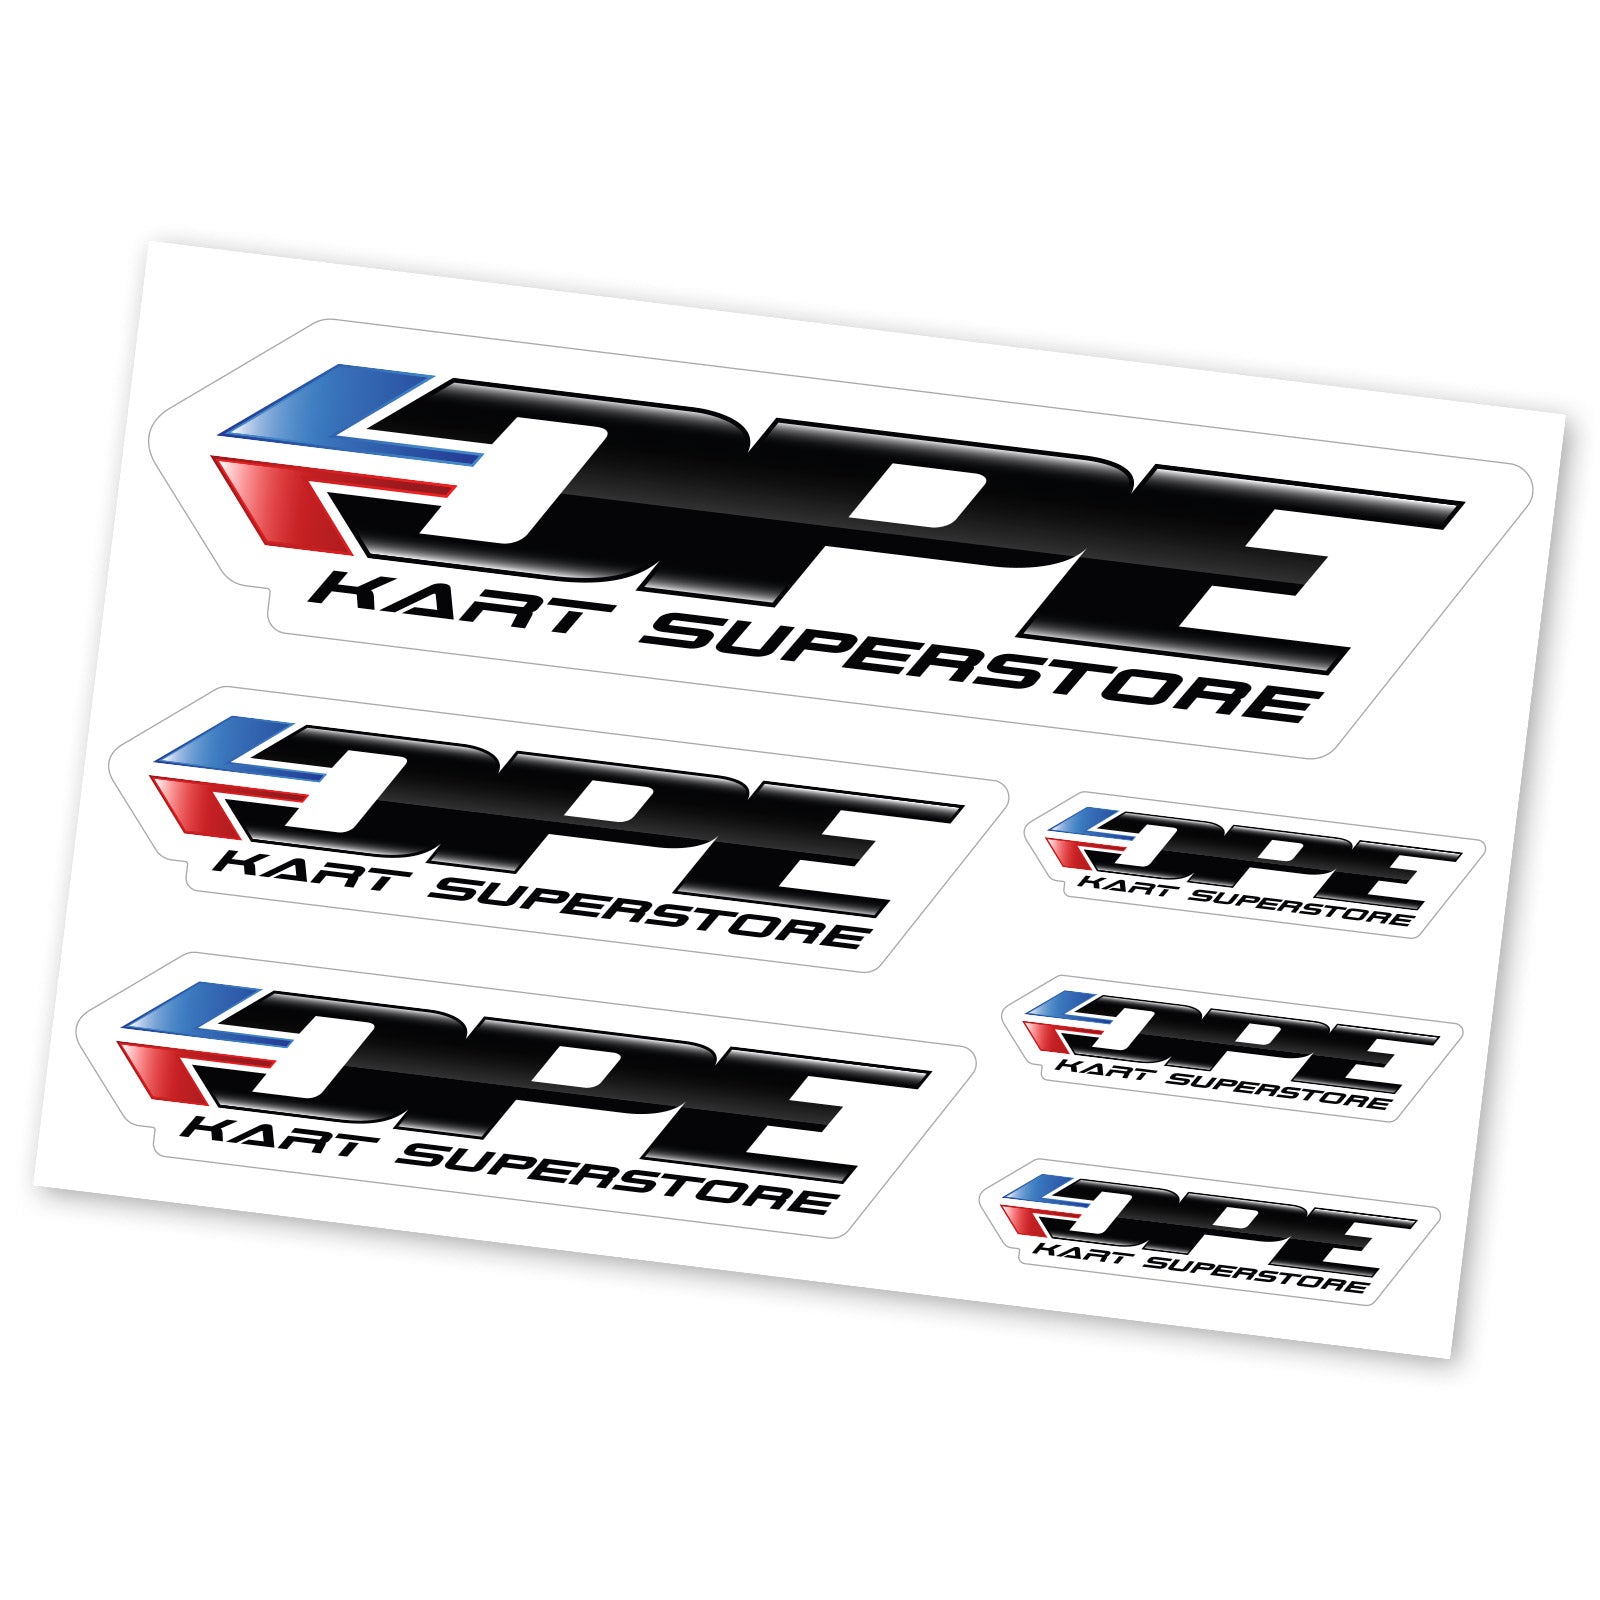 DPE Sticker Sheet